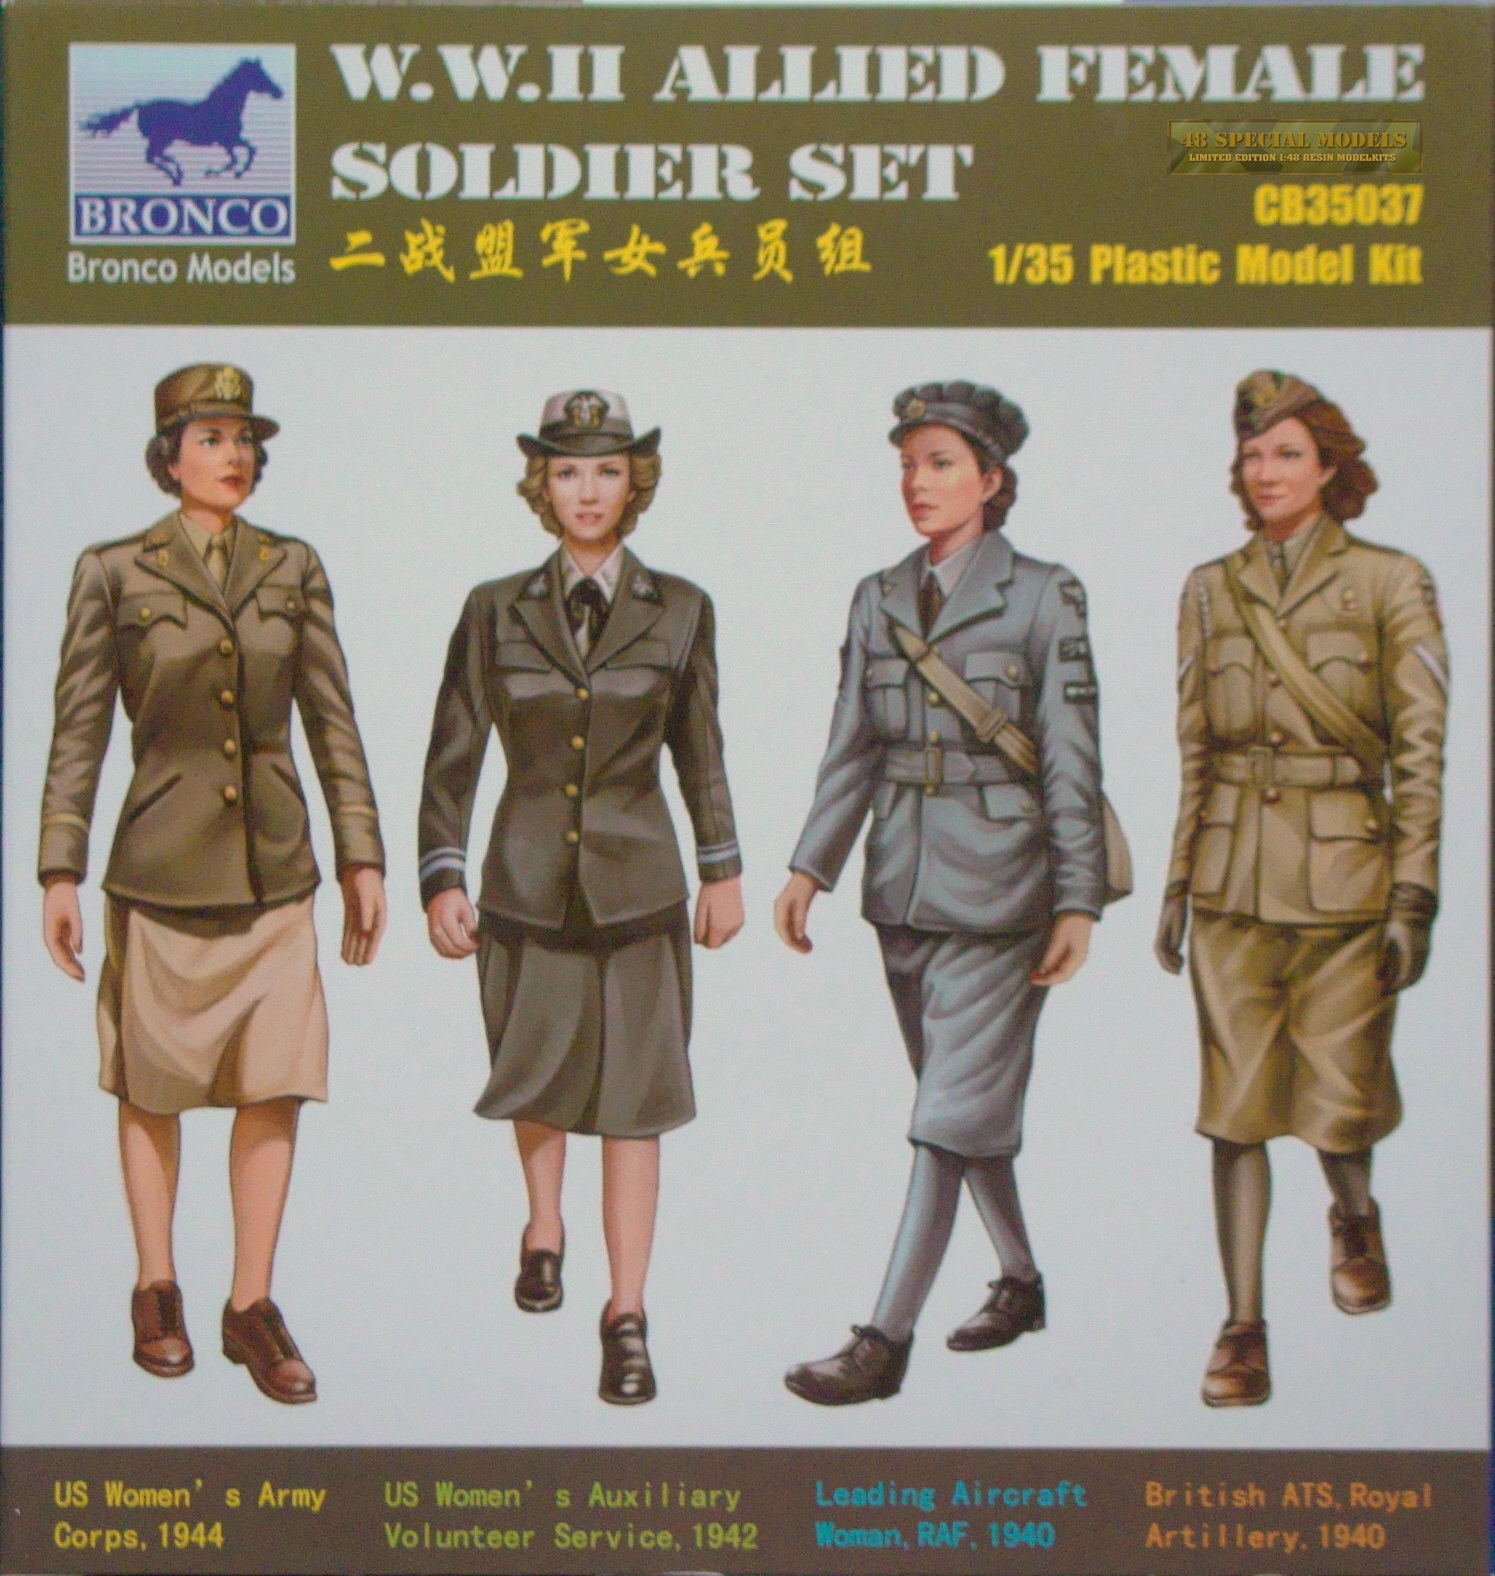 cb35037-Female-Soldier-Set.jpg